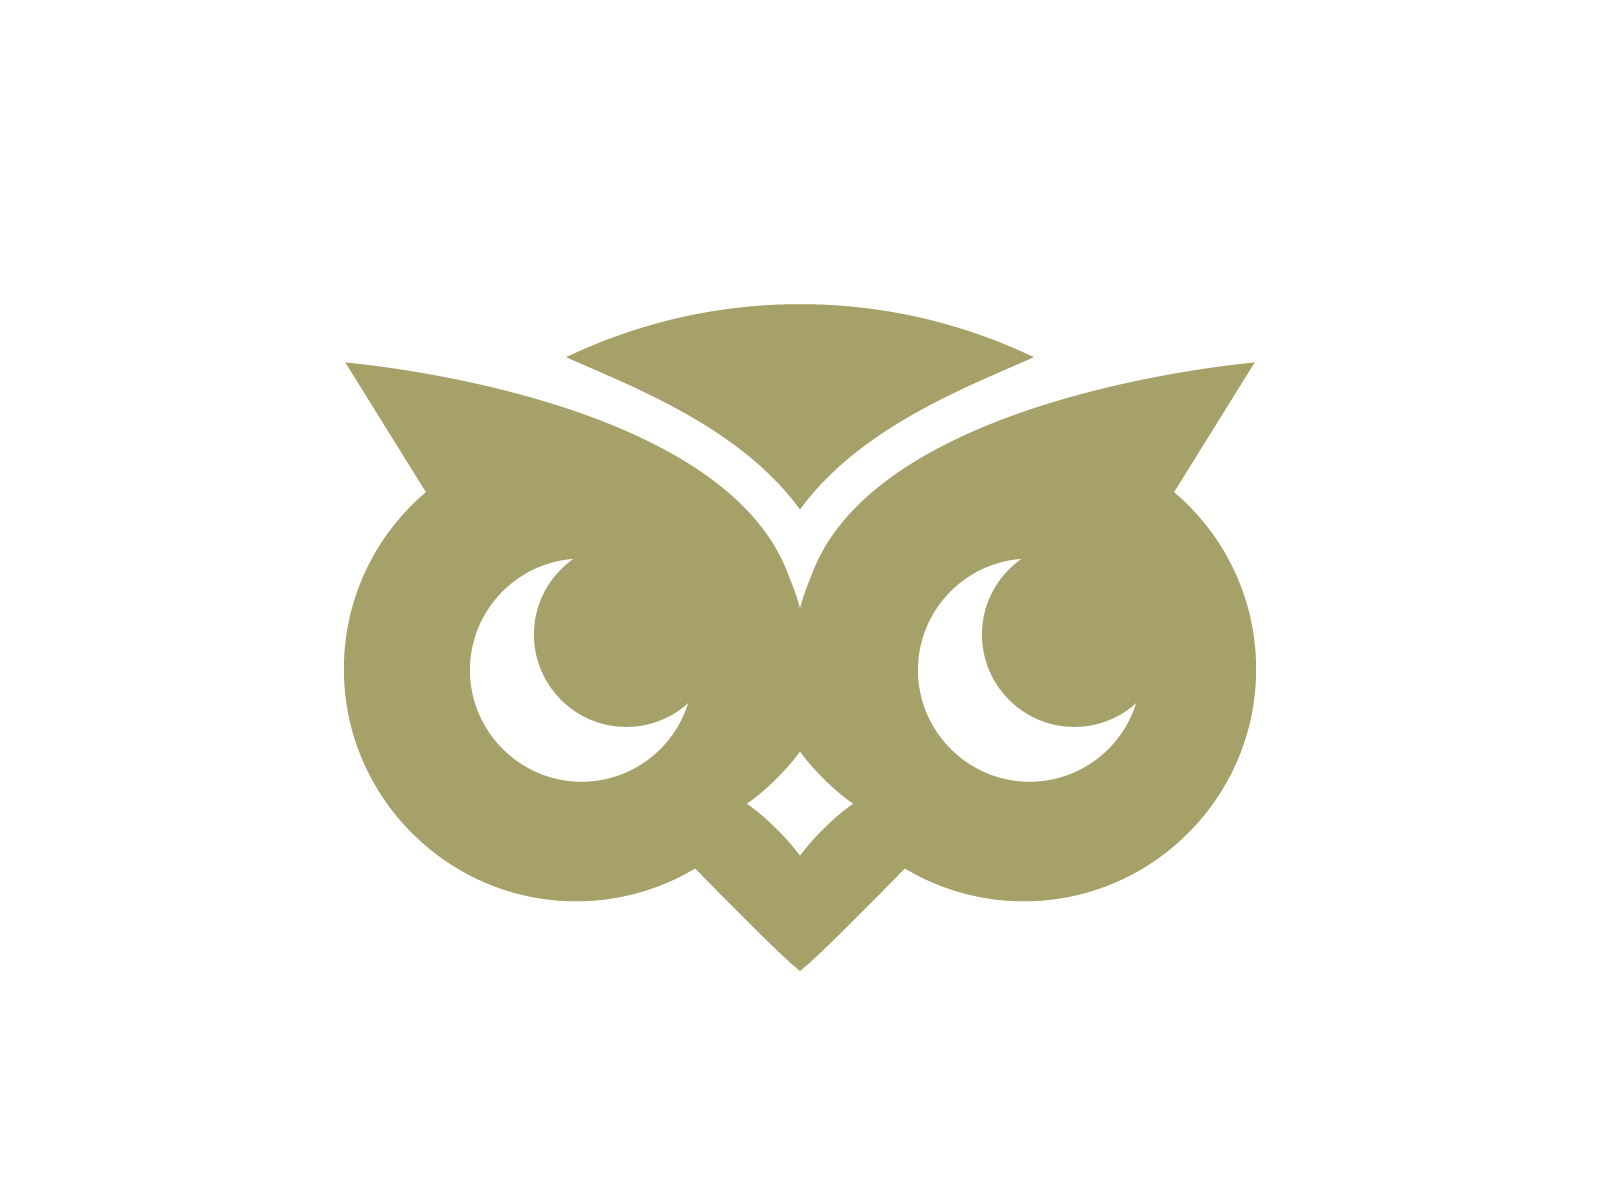 logo owl minimal moon star by monome on Dribbble